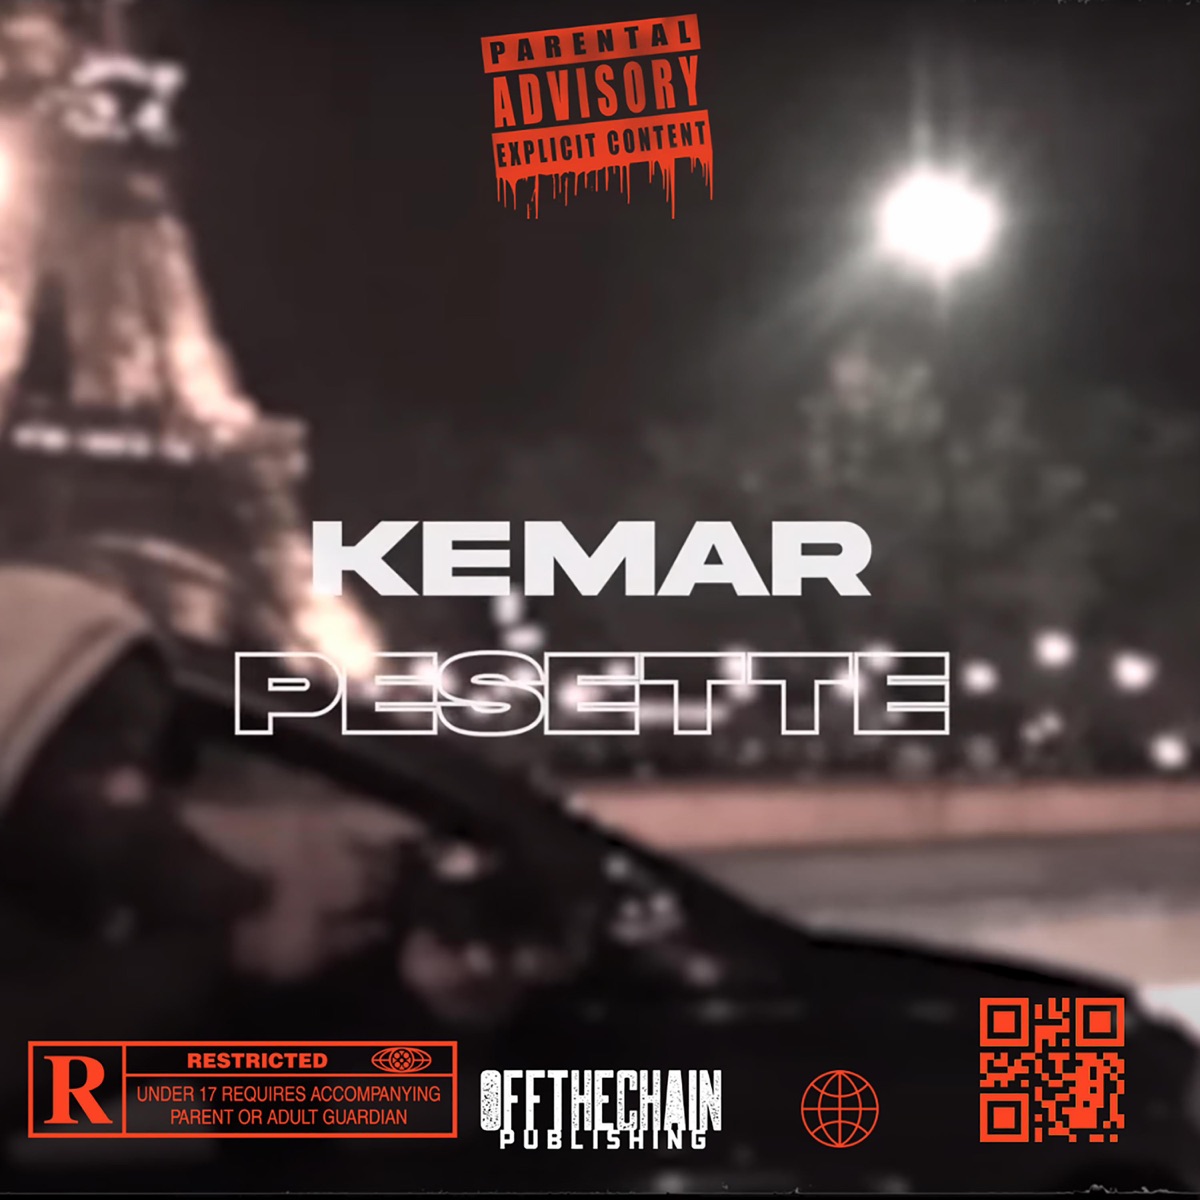 Pesette - Single – Album par Kemar_L1 – Apple Music